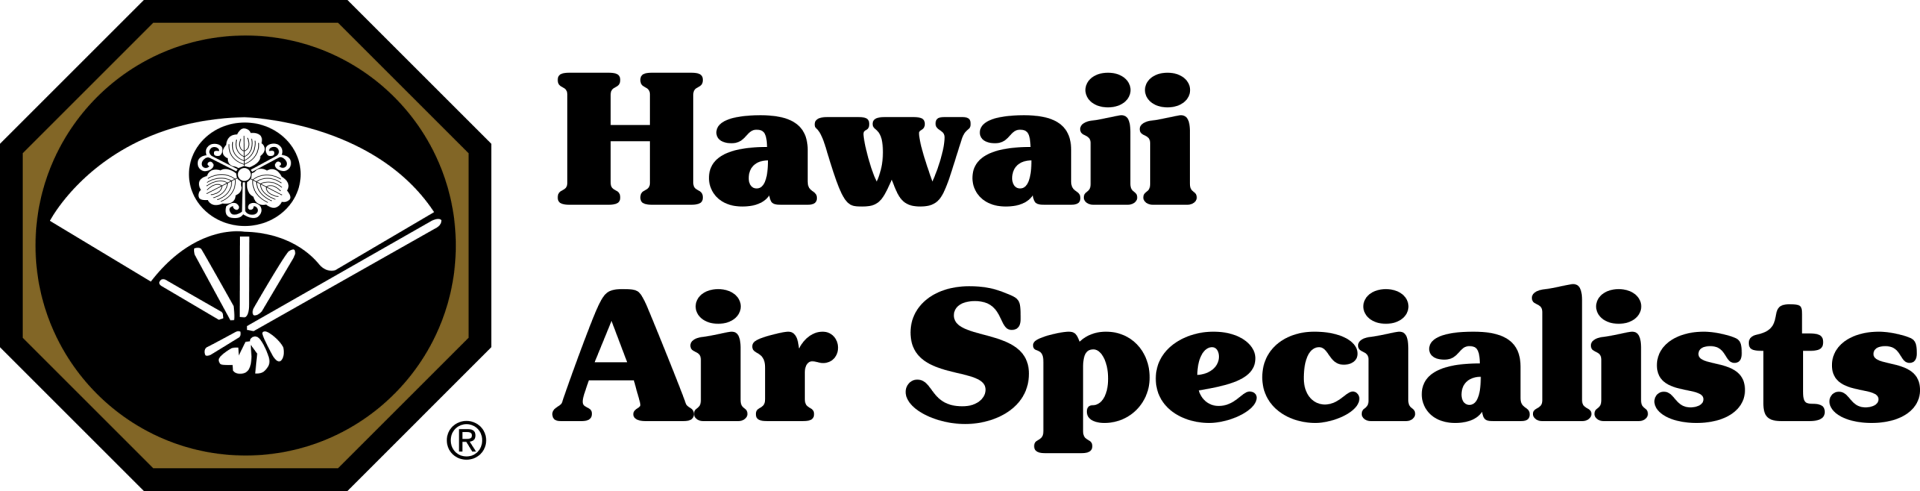 Hawaii Air Specialists - Logo